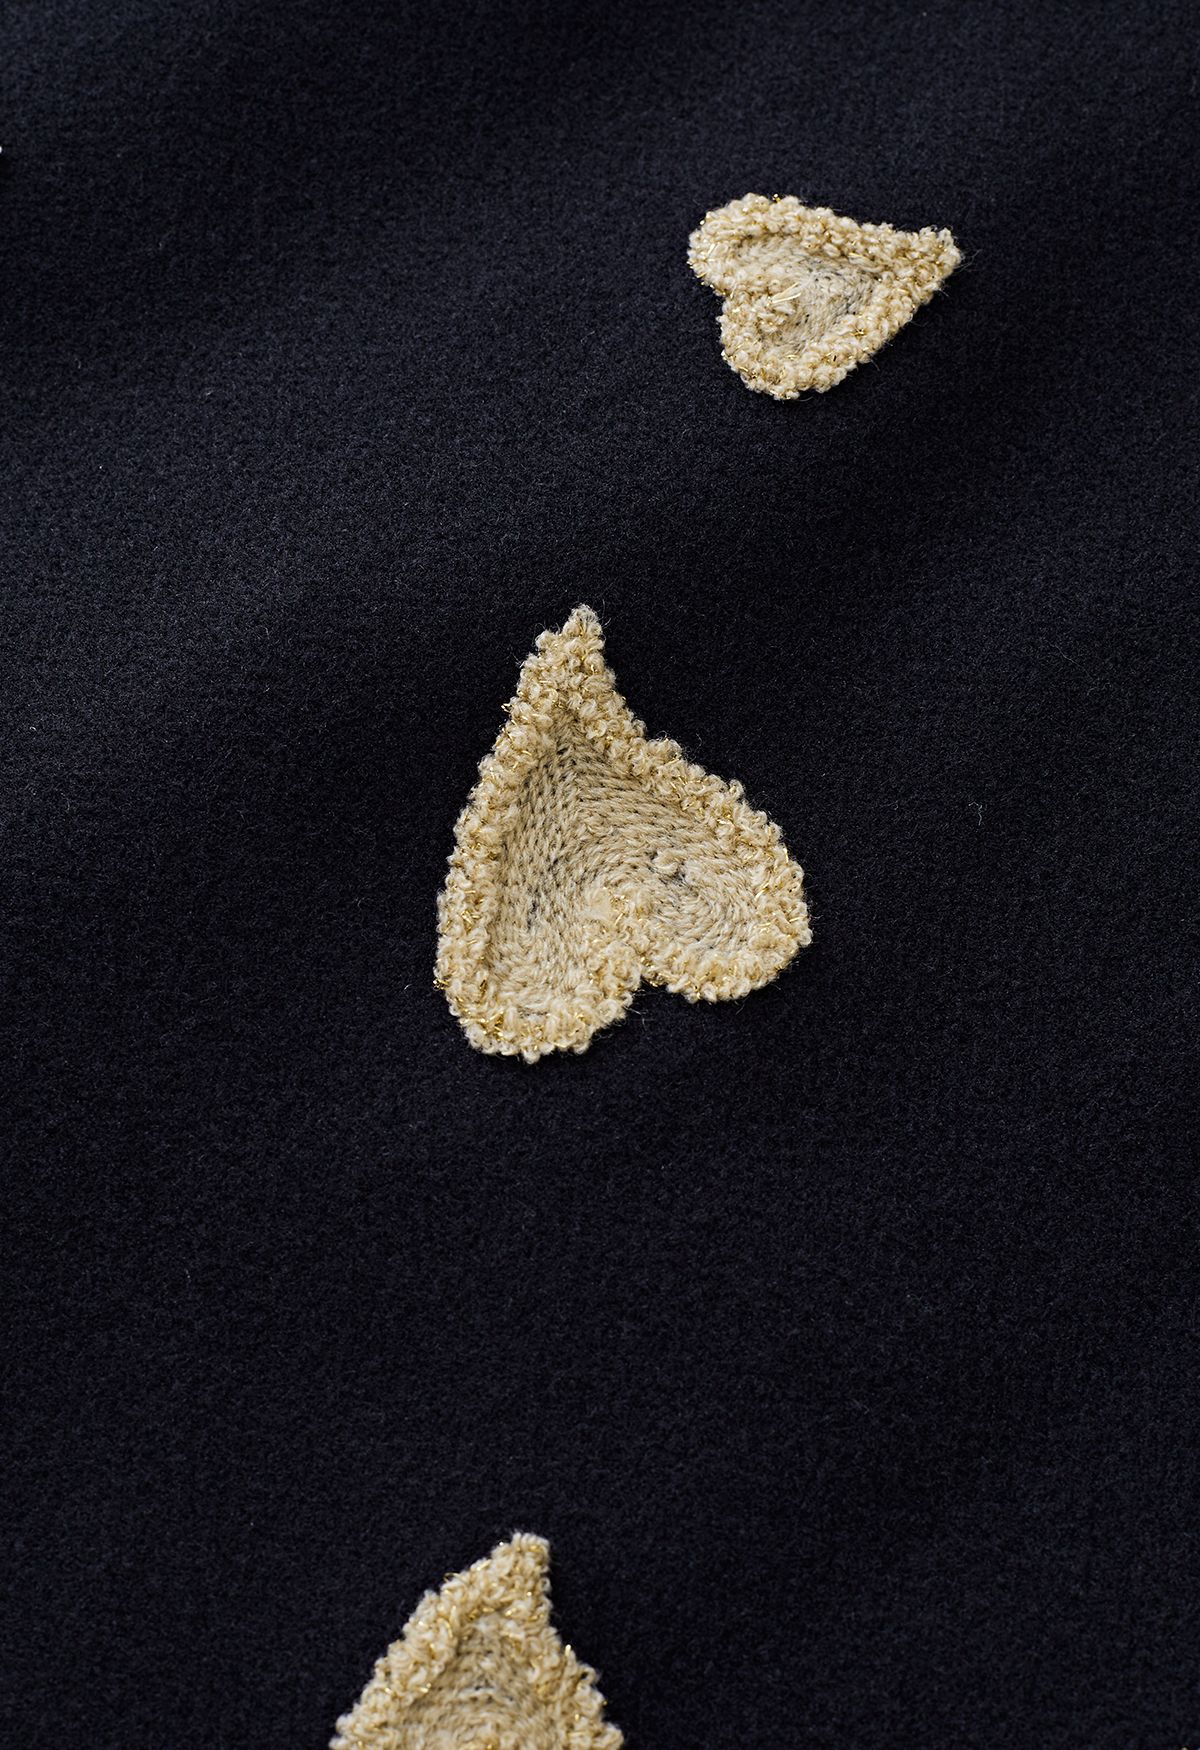 Hearts Embroidered Wool-Blend Mini Bud Skirt